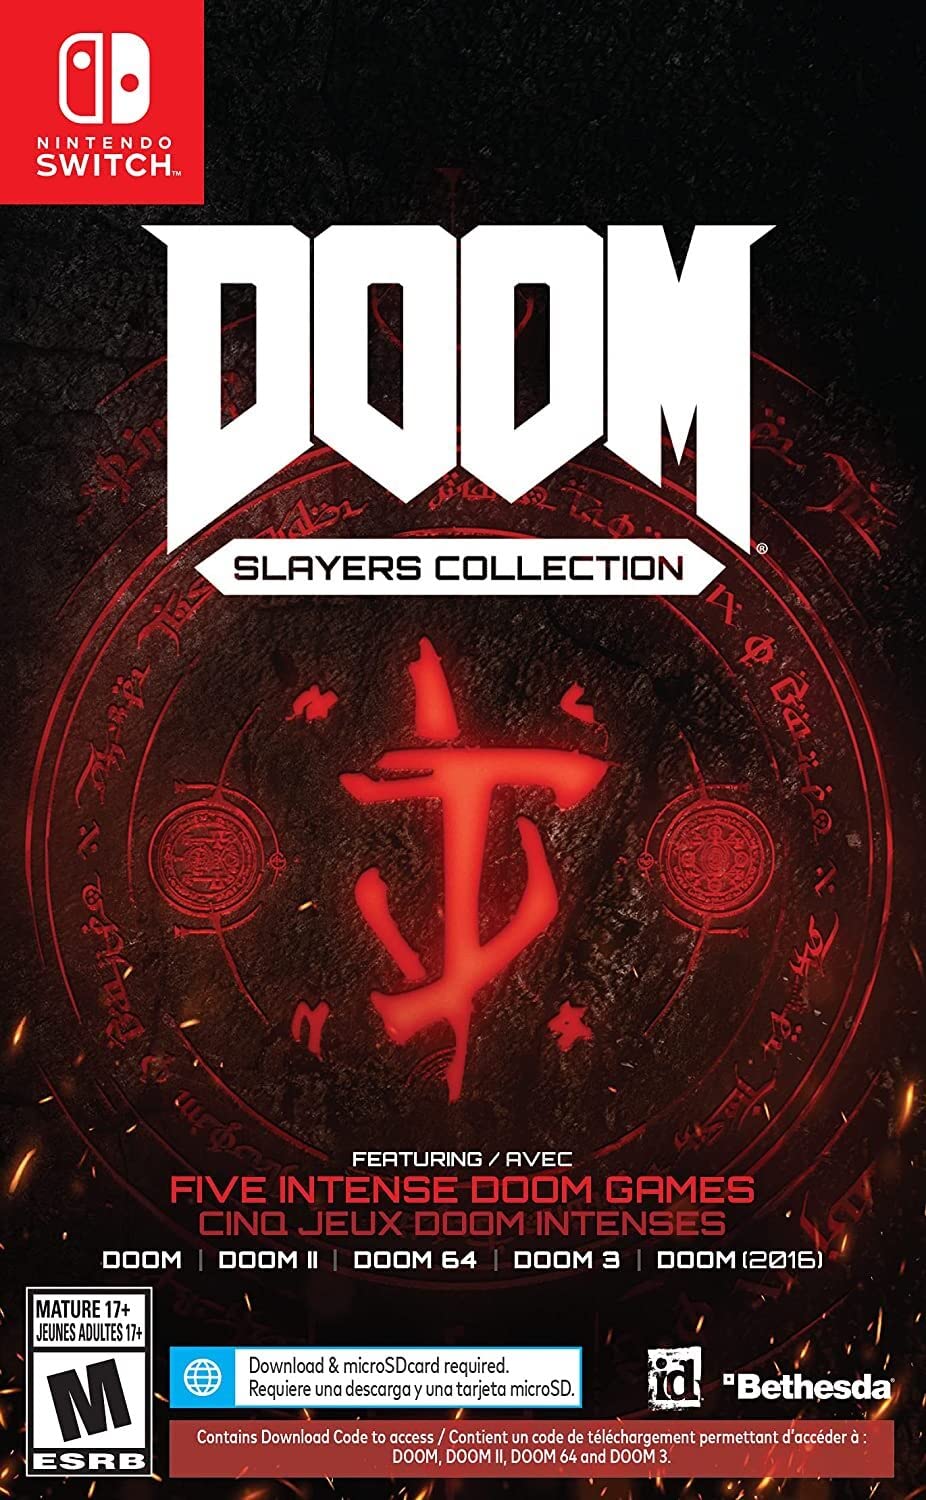 Nintendo Switch Juego Doom Slayer Collection